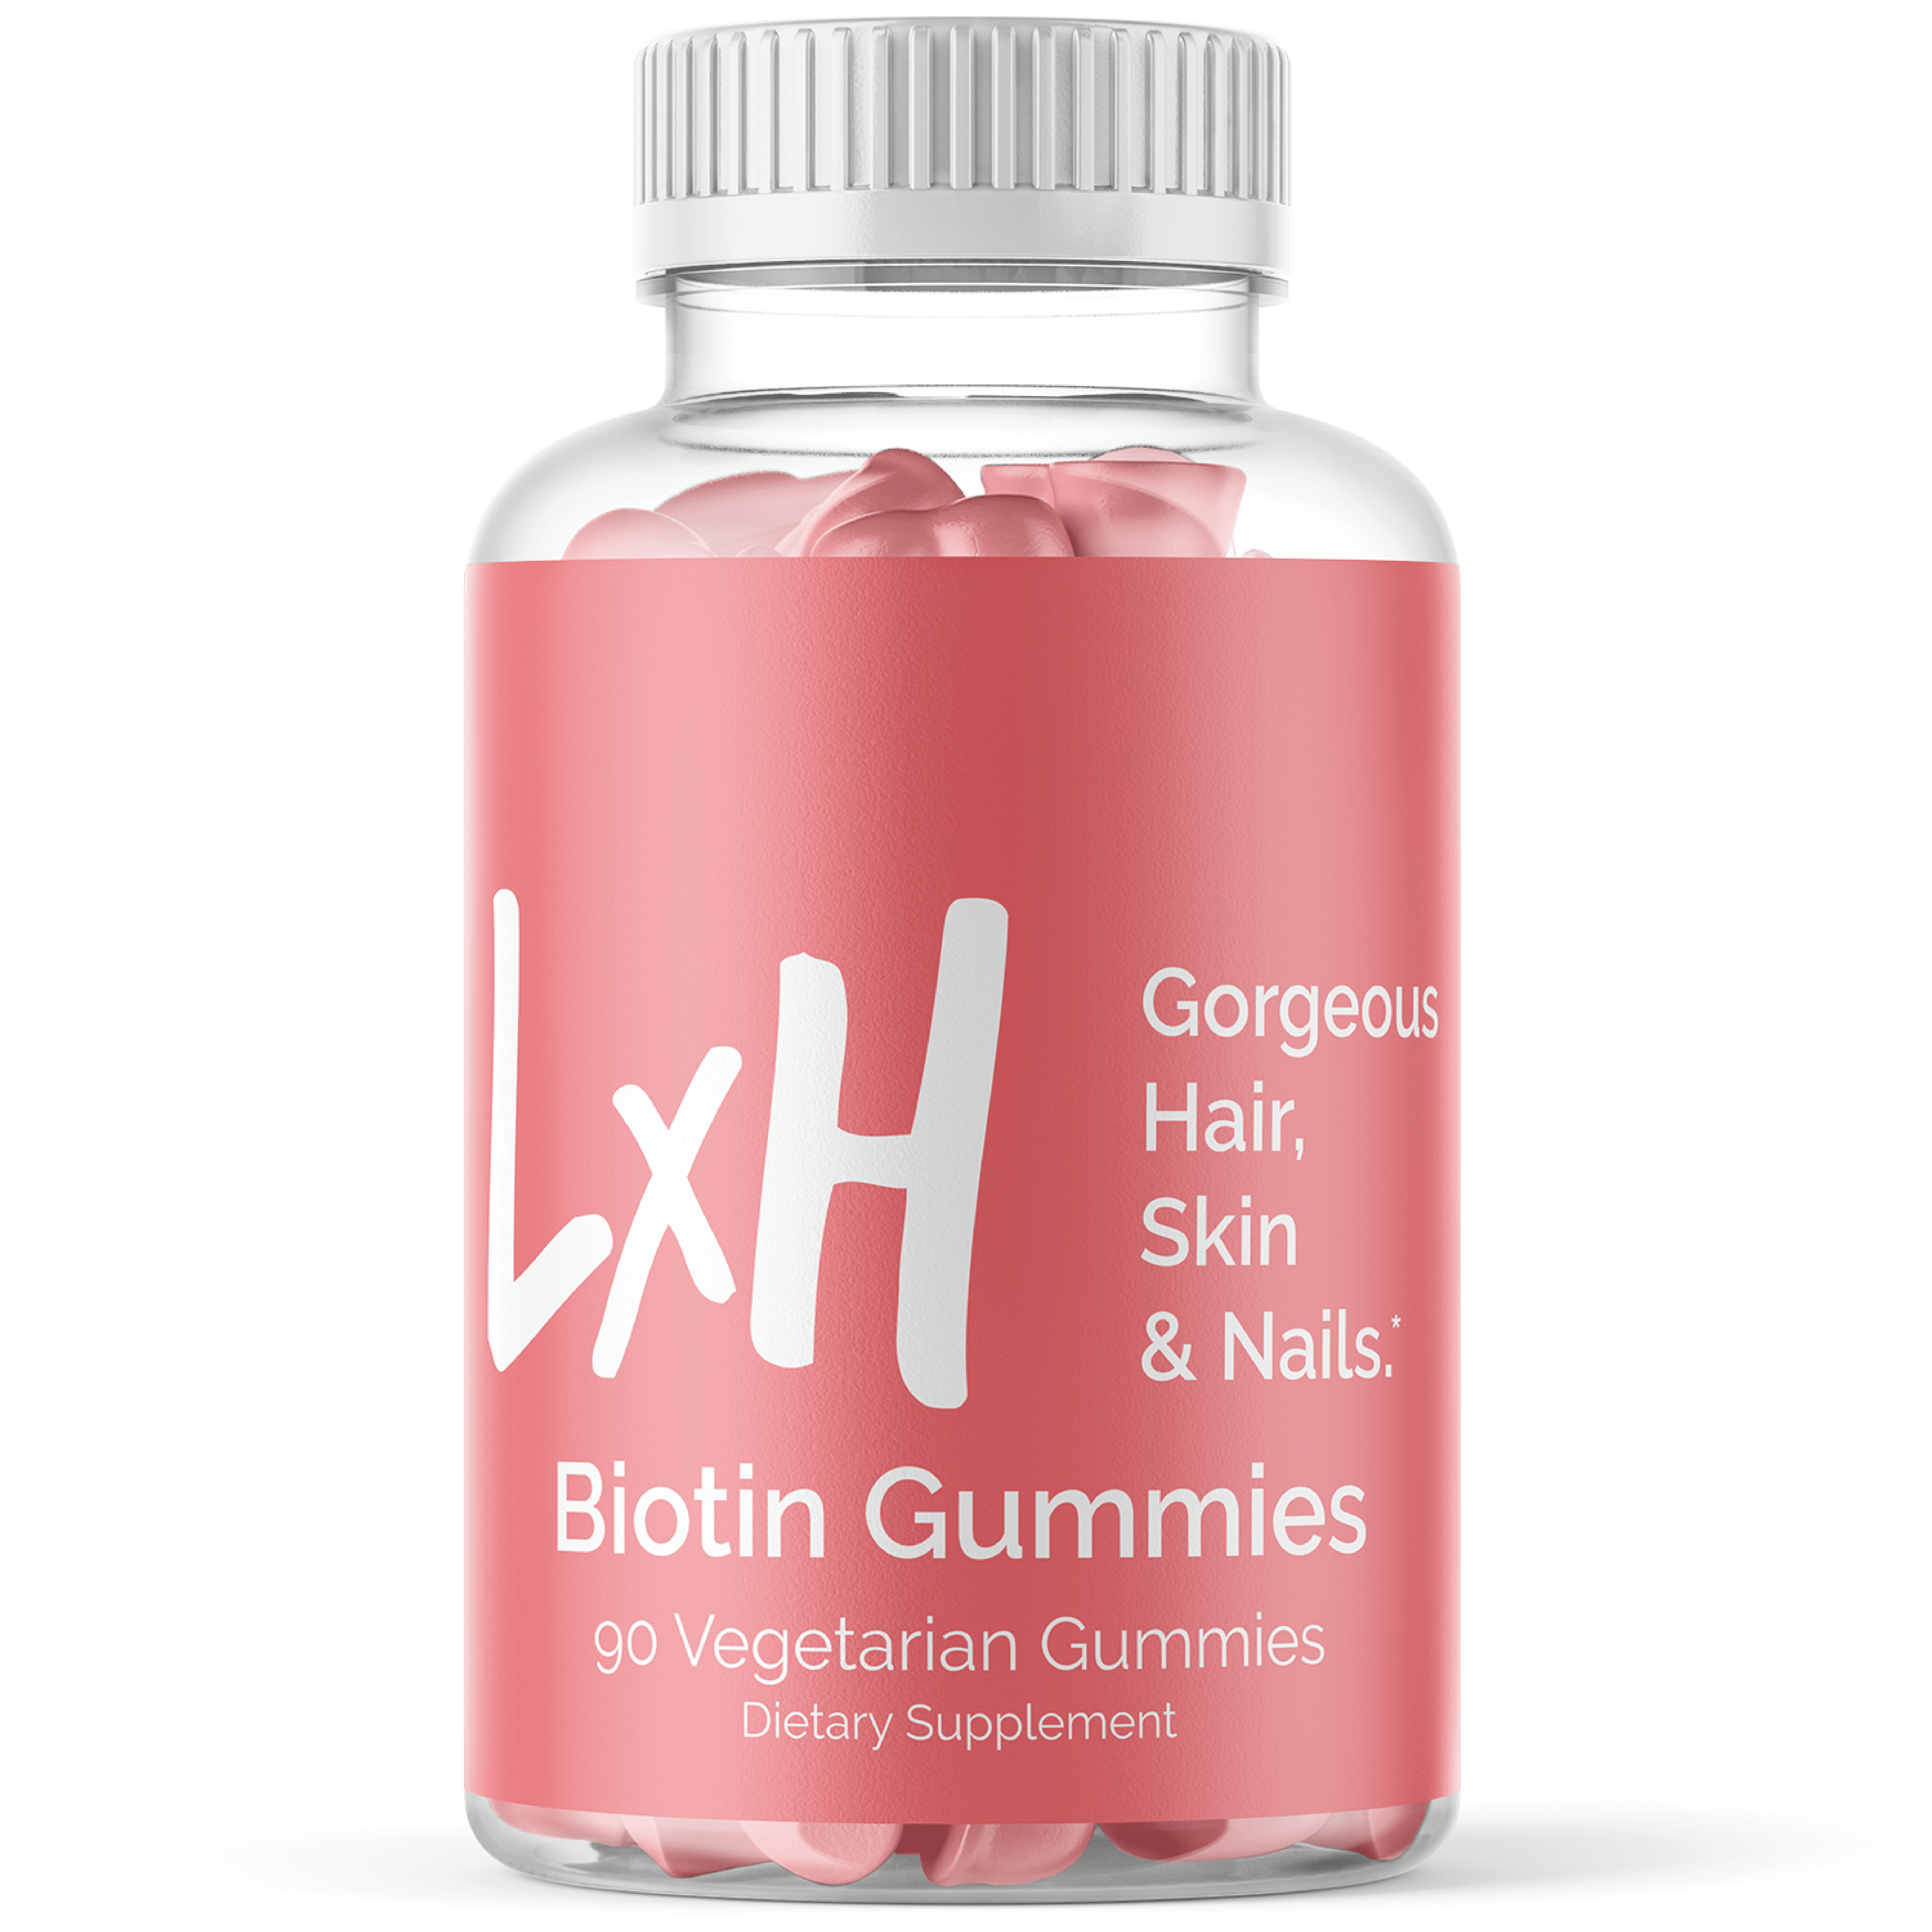 LxH, Biotin Gummies, 90 Vegetarian Gummies